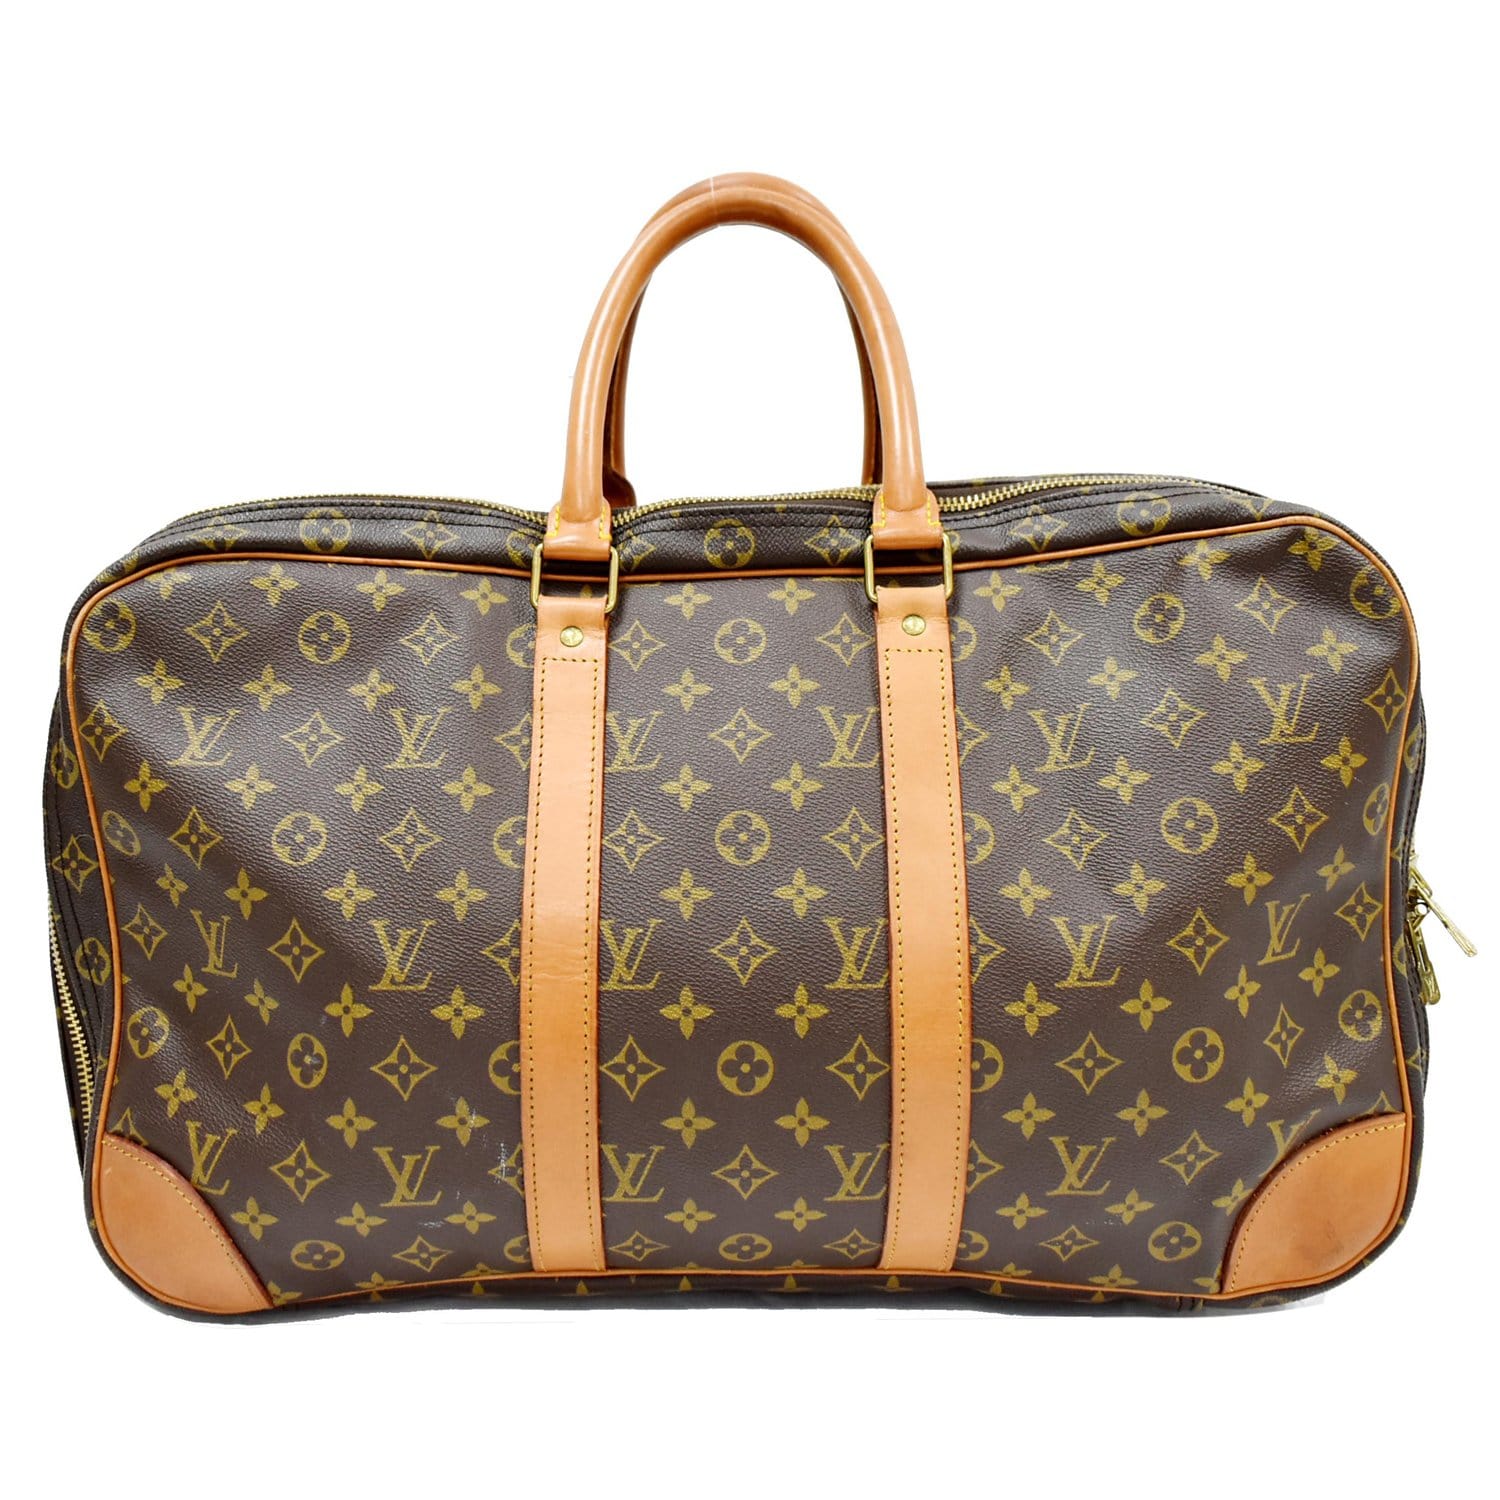 Vintage Louis Vuitton monogram travel bag